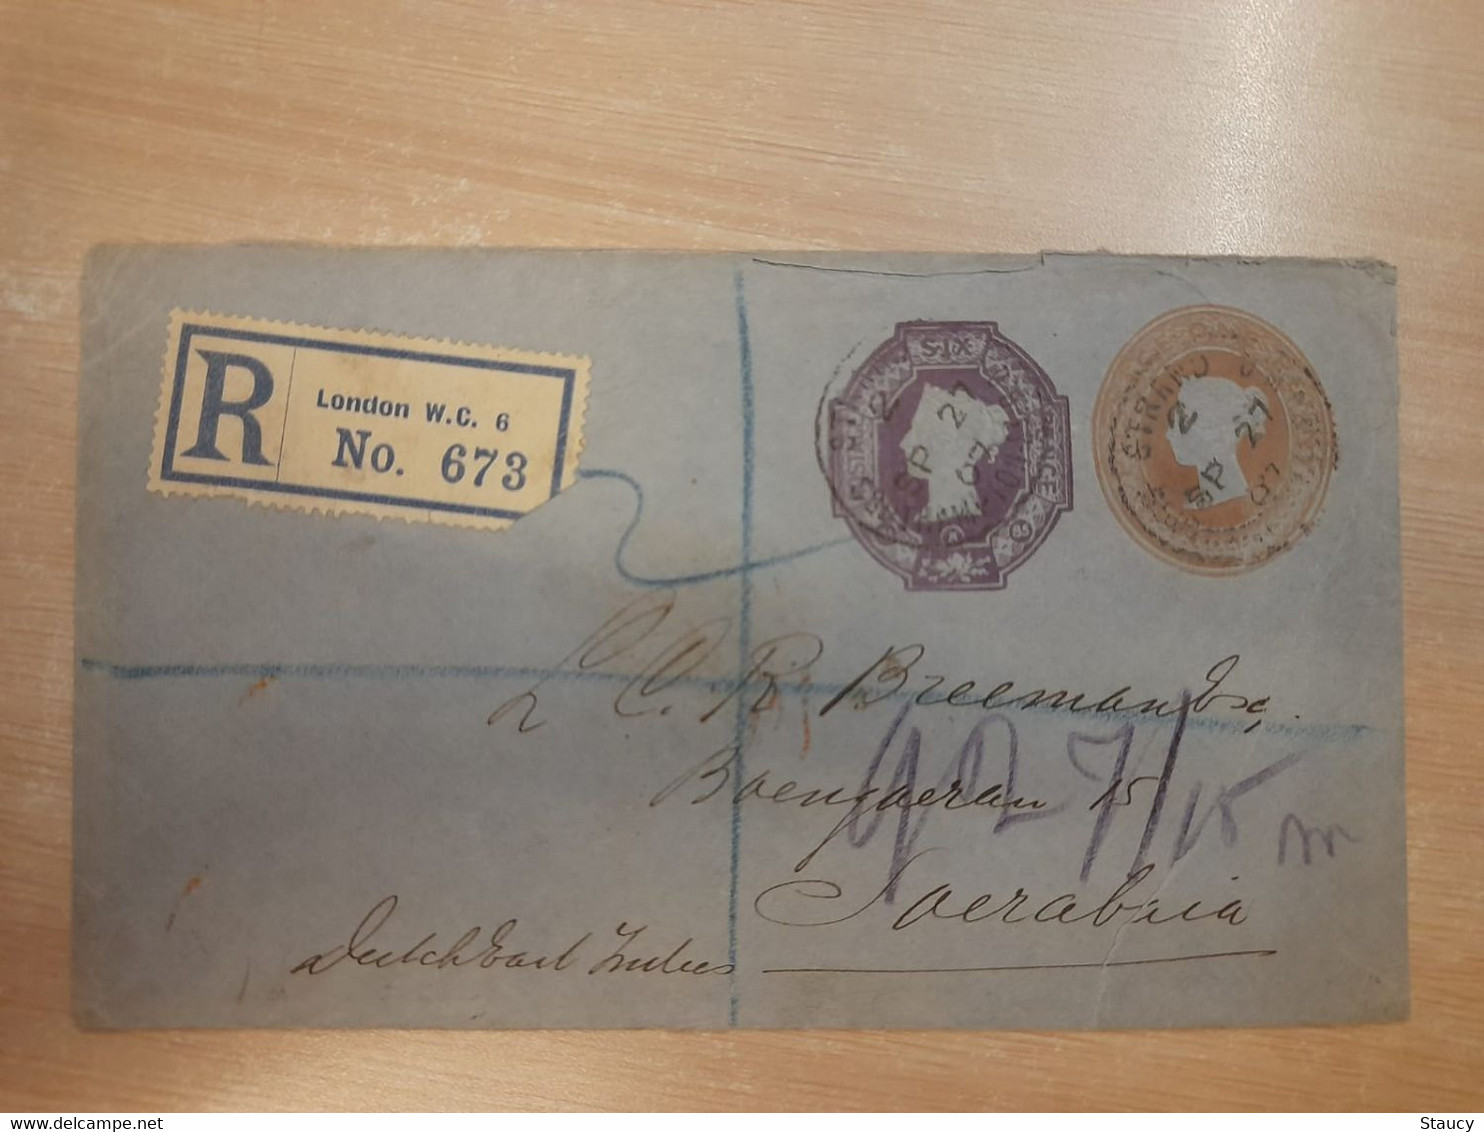 UK GB GREAT BRITAIN QV Registered Stationery Cover 6d + 1d Embossed London To Soerabaja Dutch Indies/ India As Per Scan - Briefe U. Dokumente